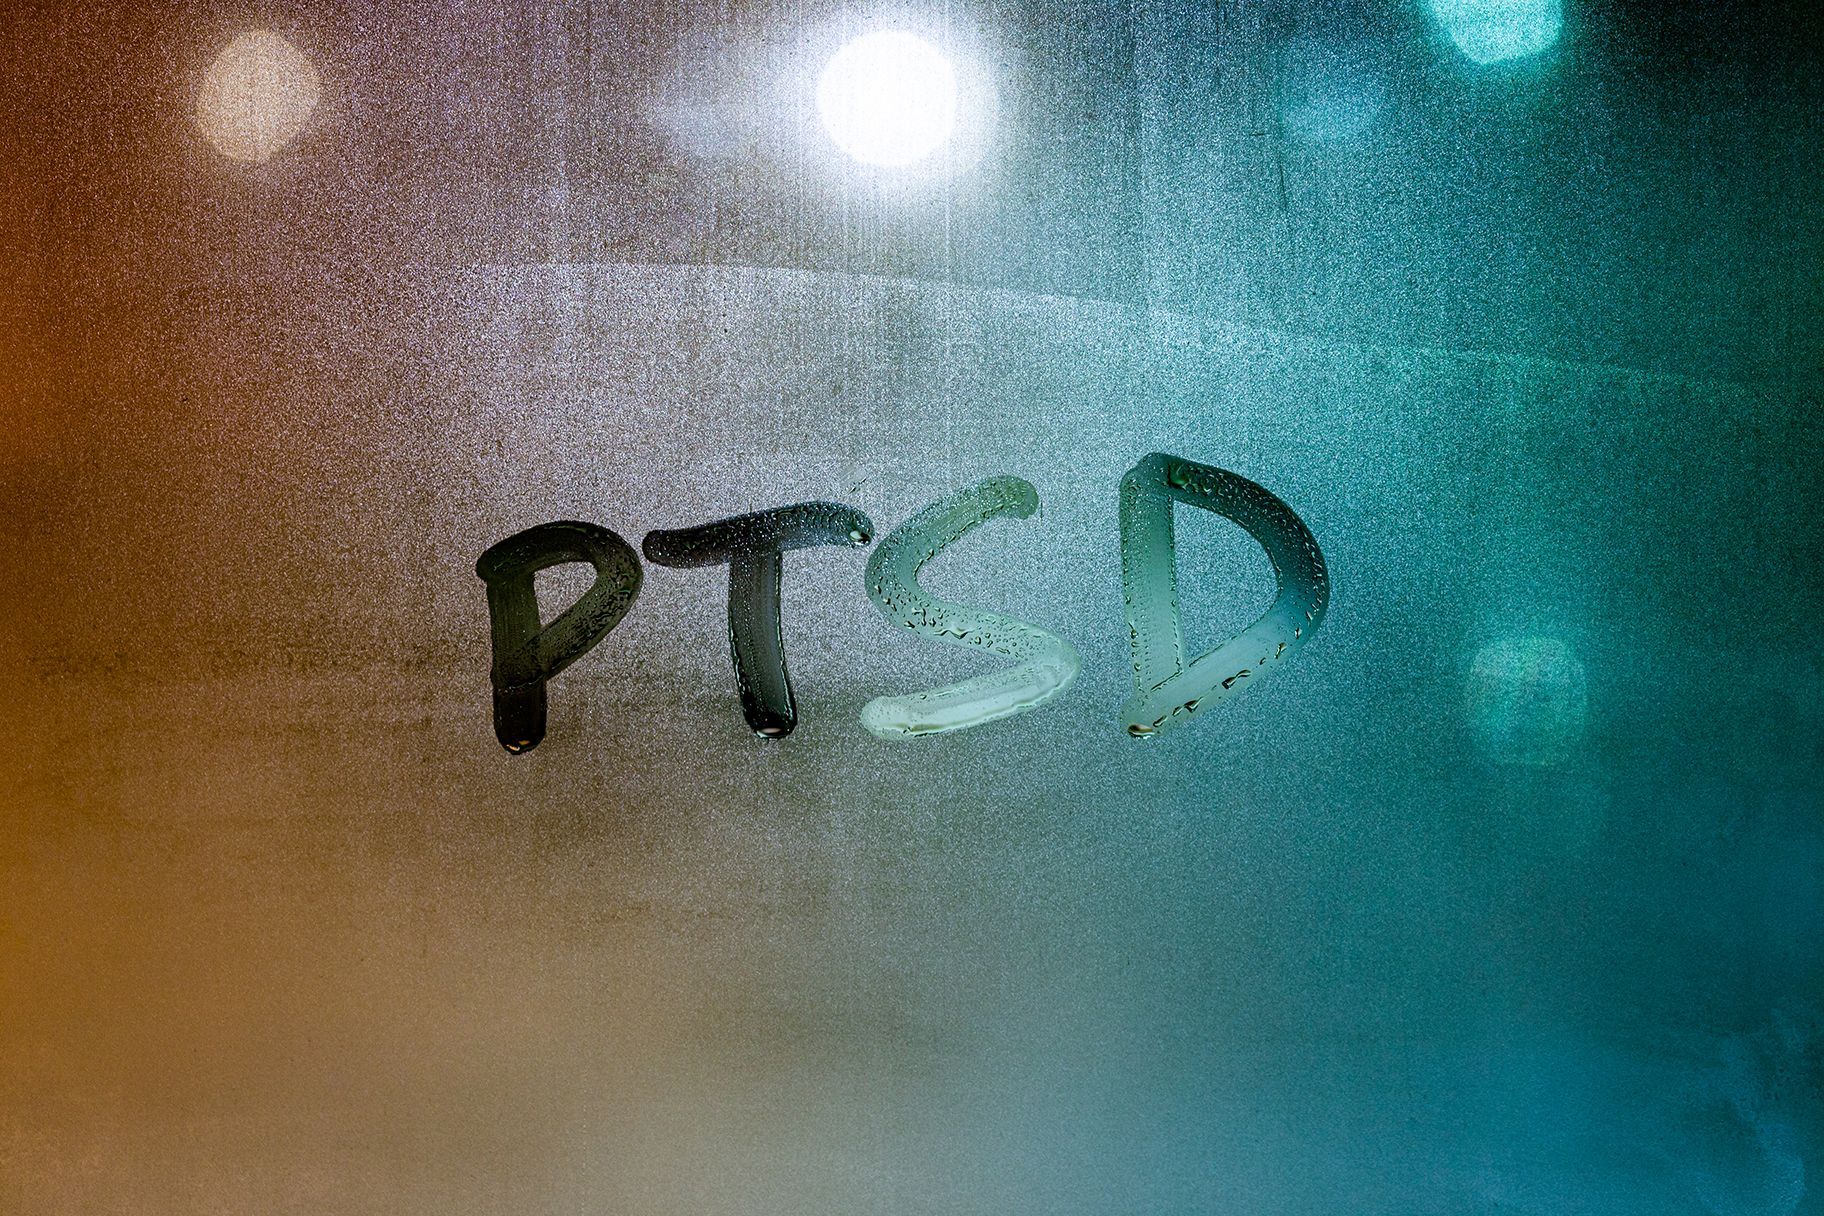 abbreviation ptsd post traumatic stress disorder